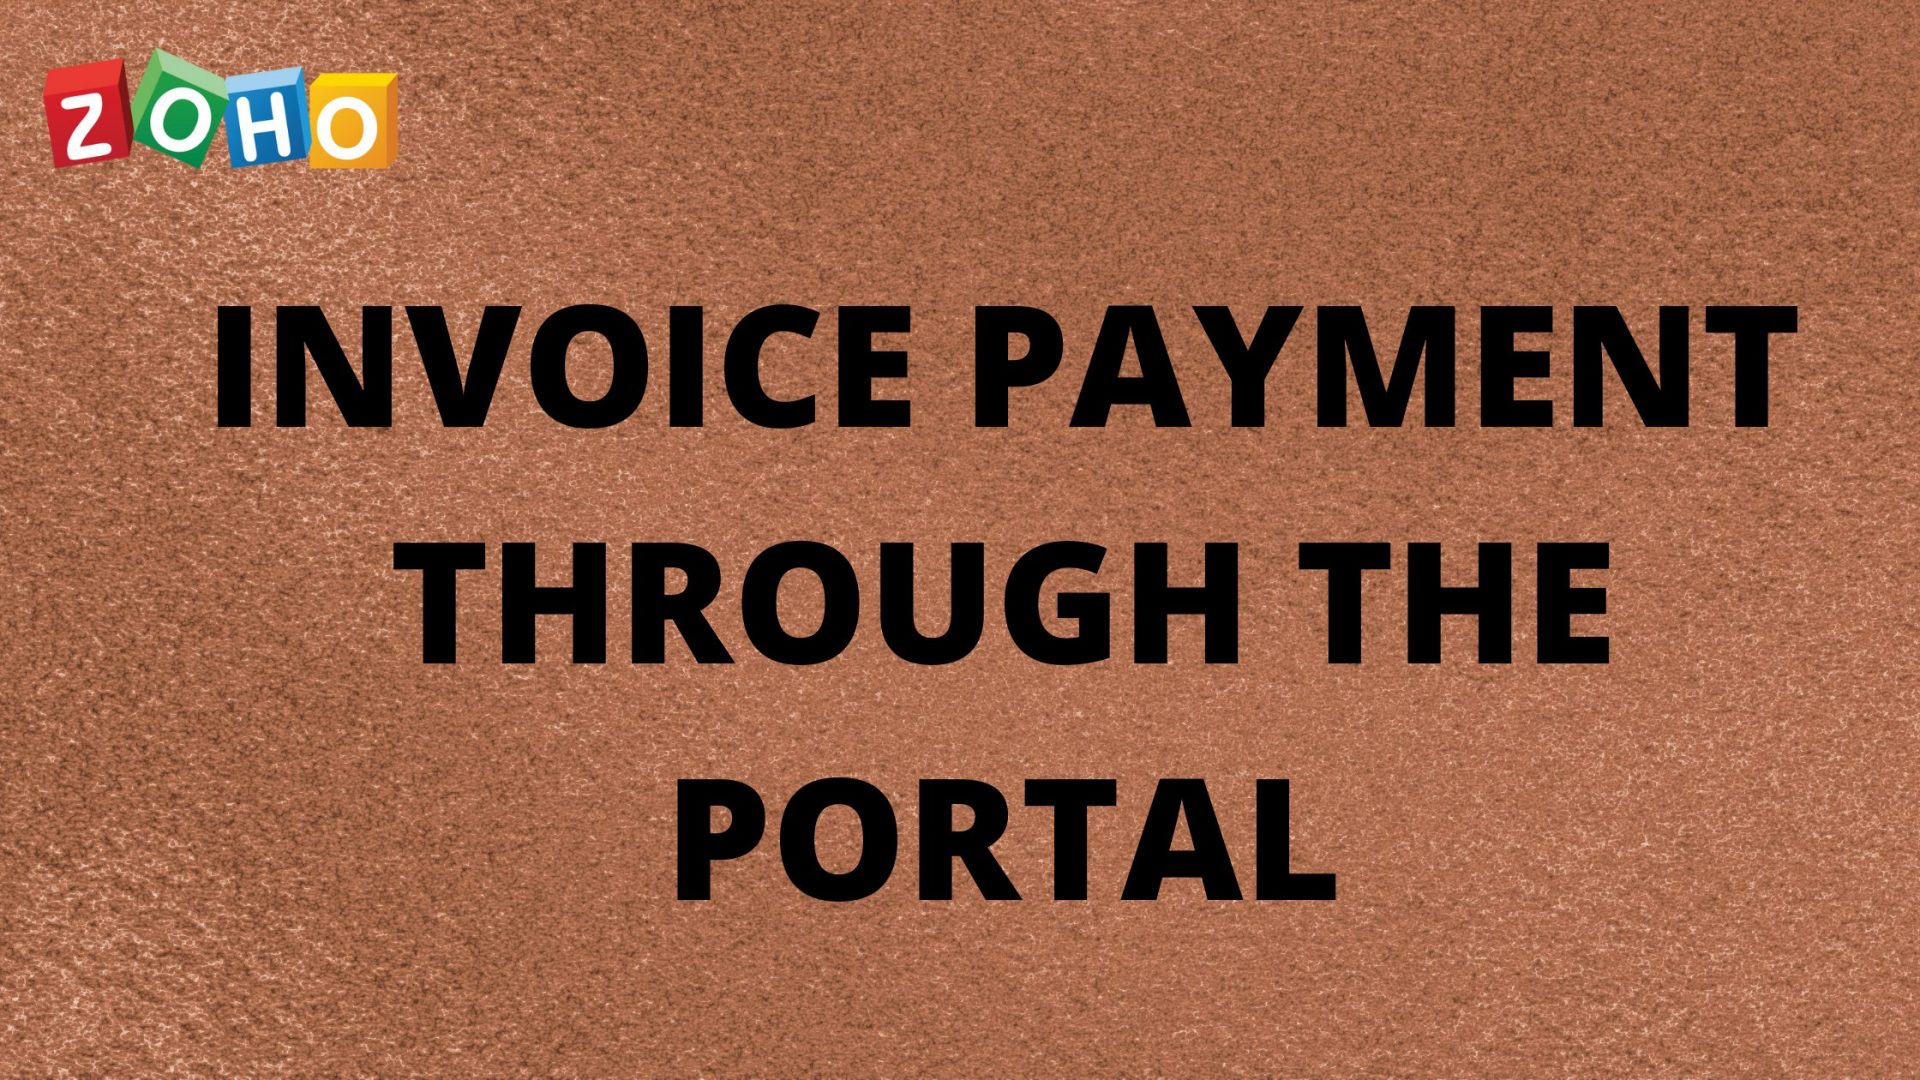 Invoice payment through the client portal